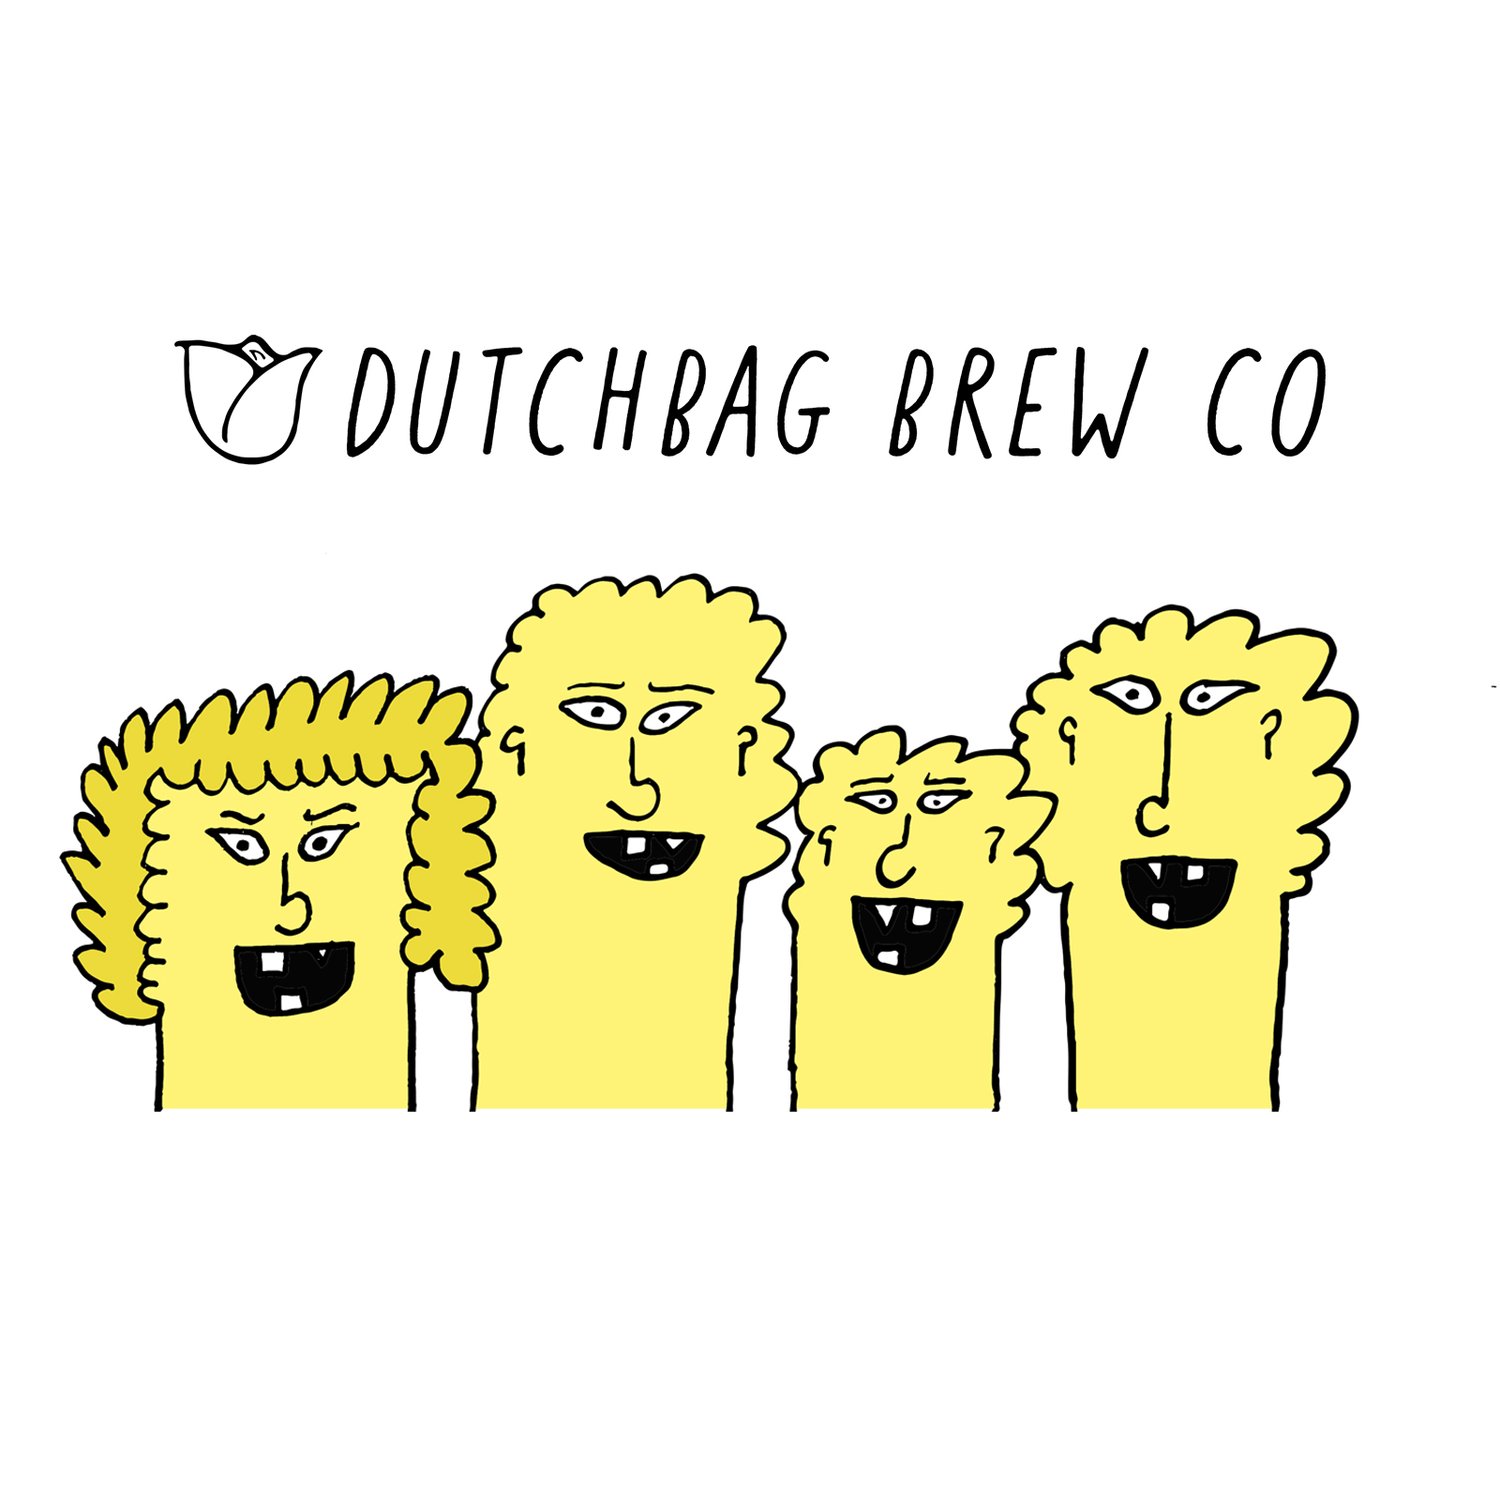 Dutchbag Brew Co.